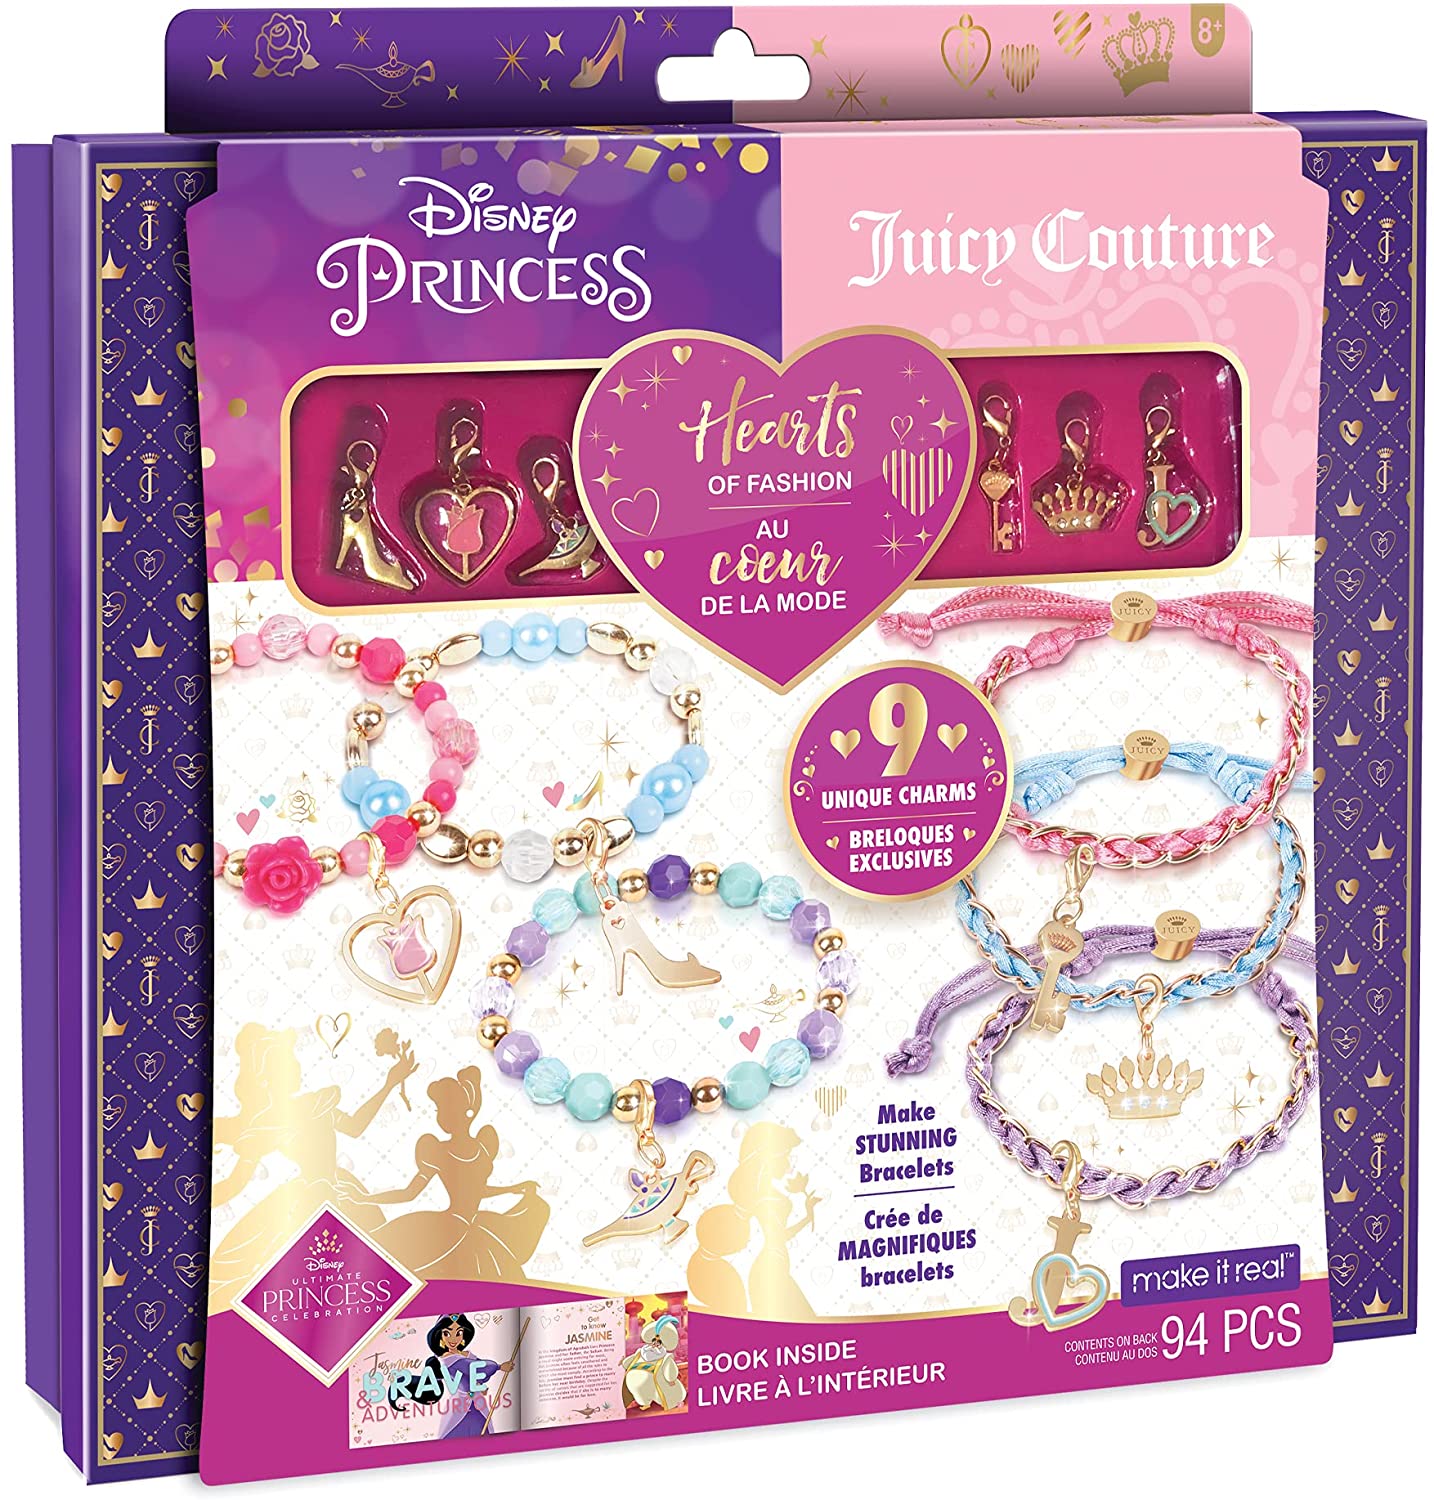 Juicy Couture Disney Princess